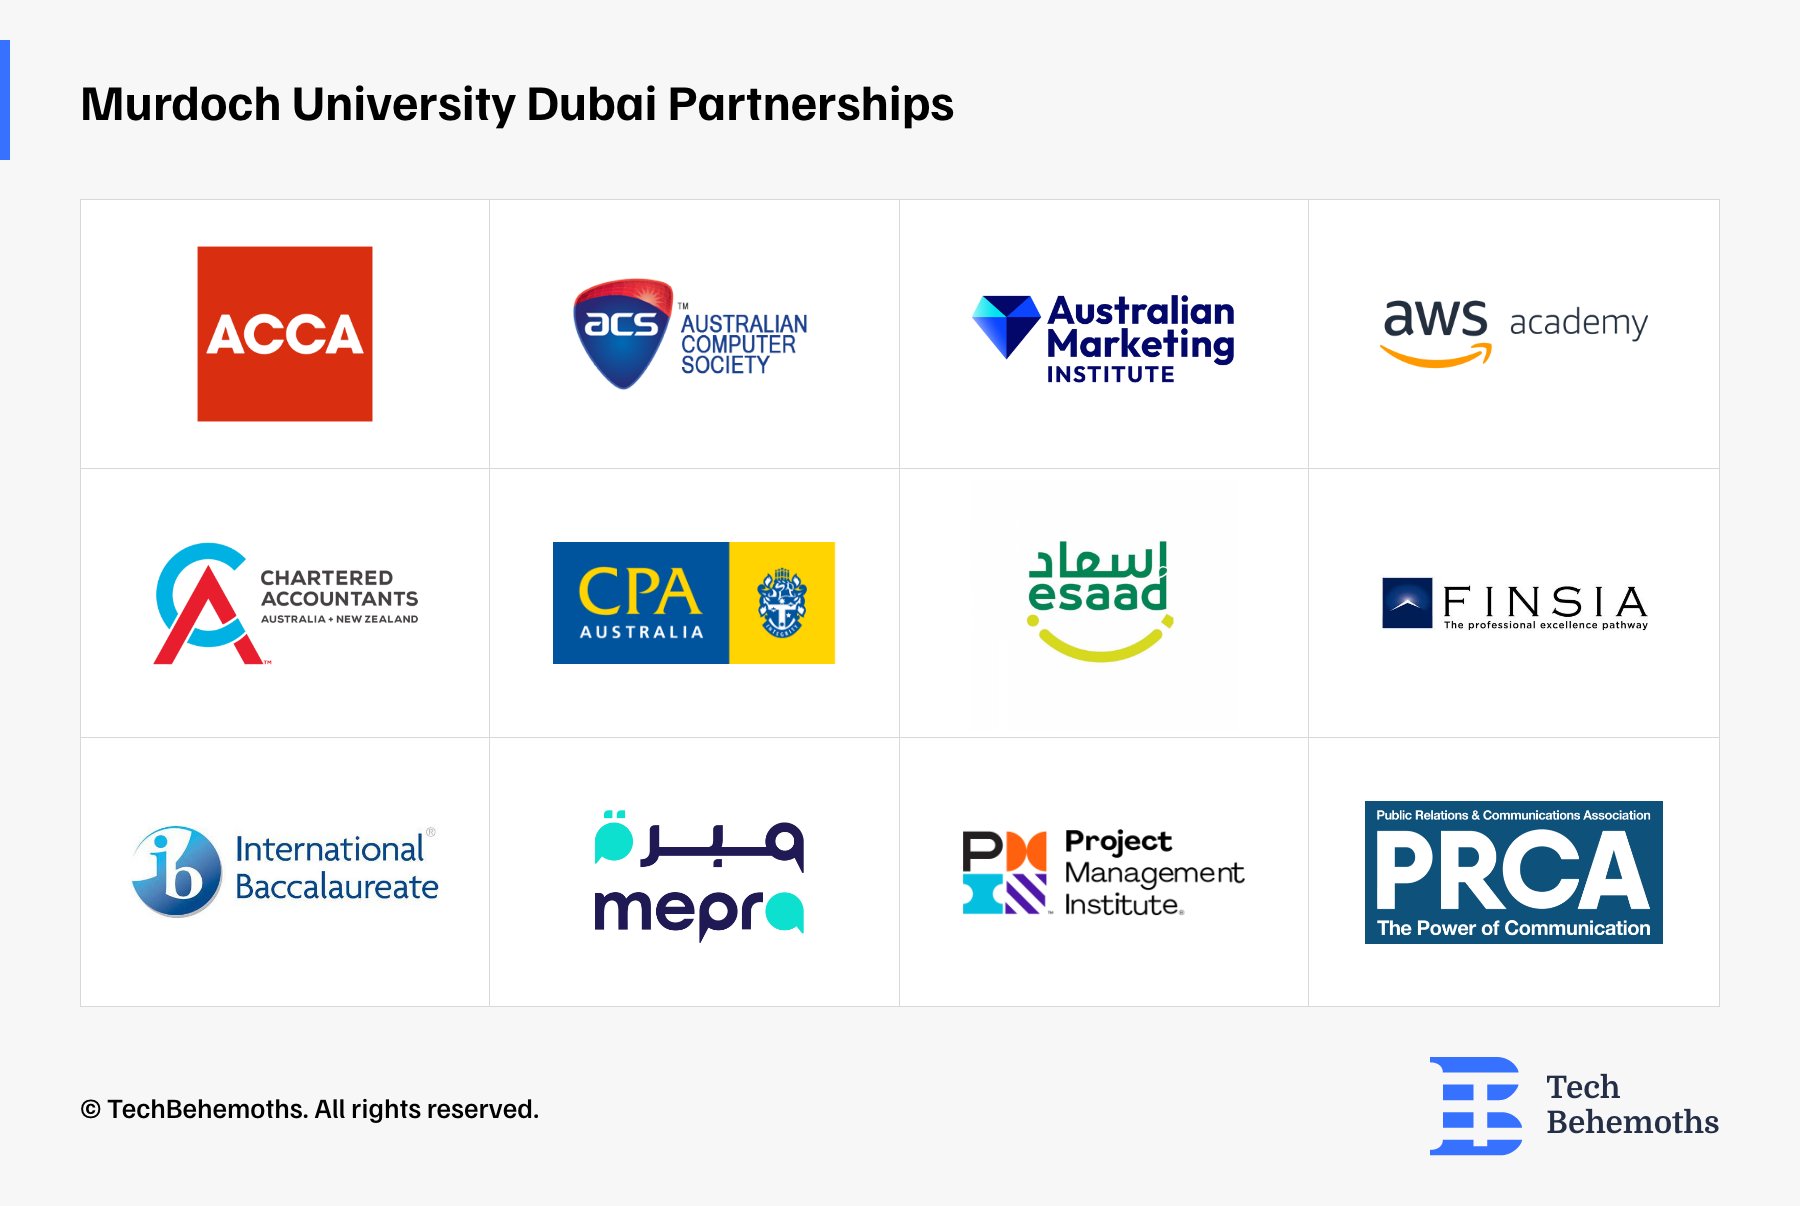 Murdoch University Dubai Partnerships